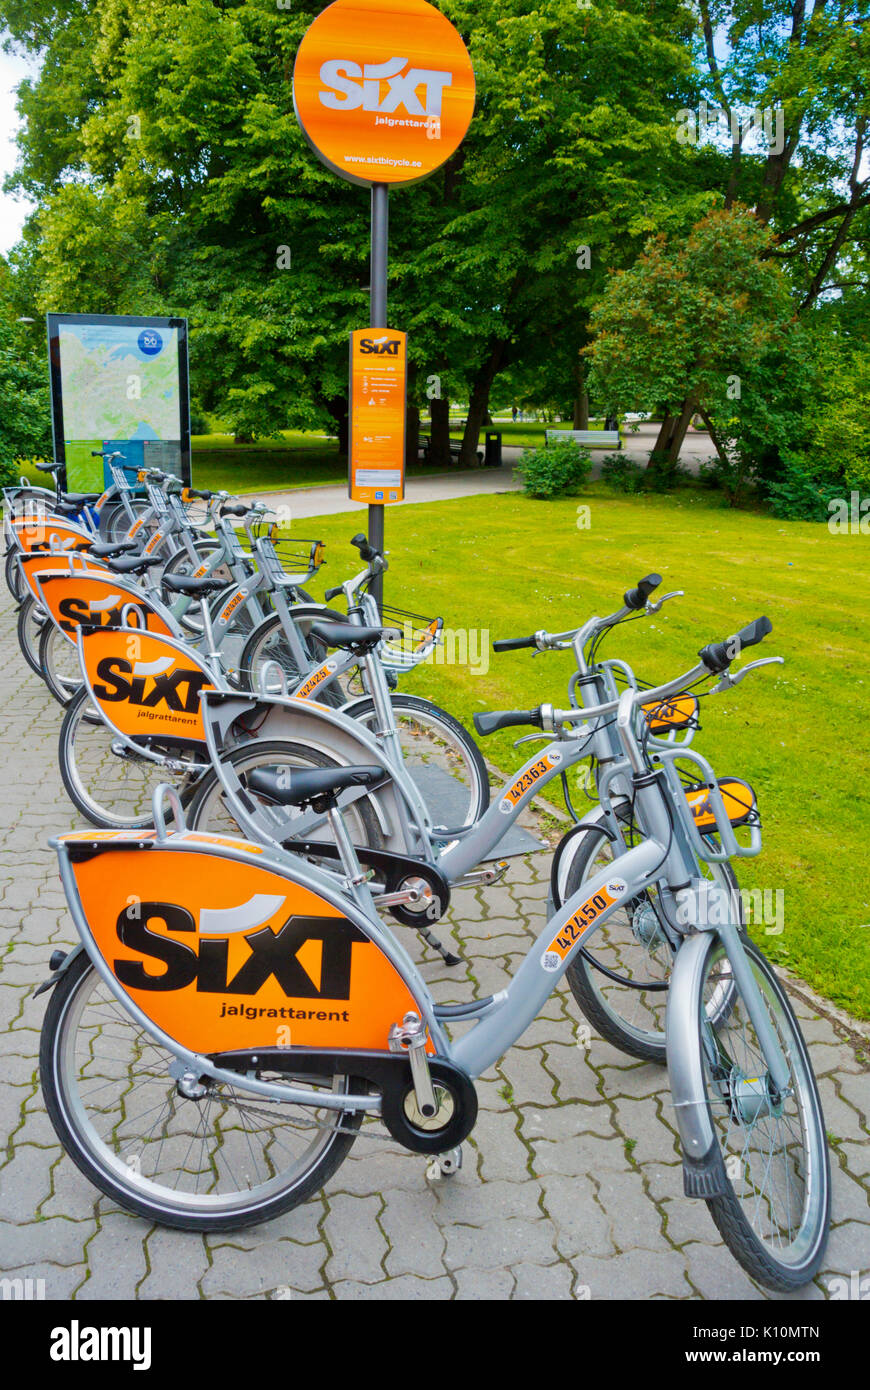 Sixt city bike rental scheme bicycles, Tallinn, Estonia Stock Photo - Alamy